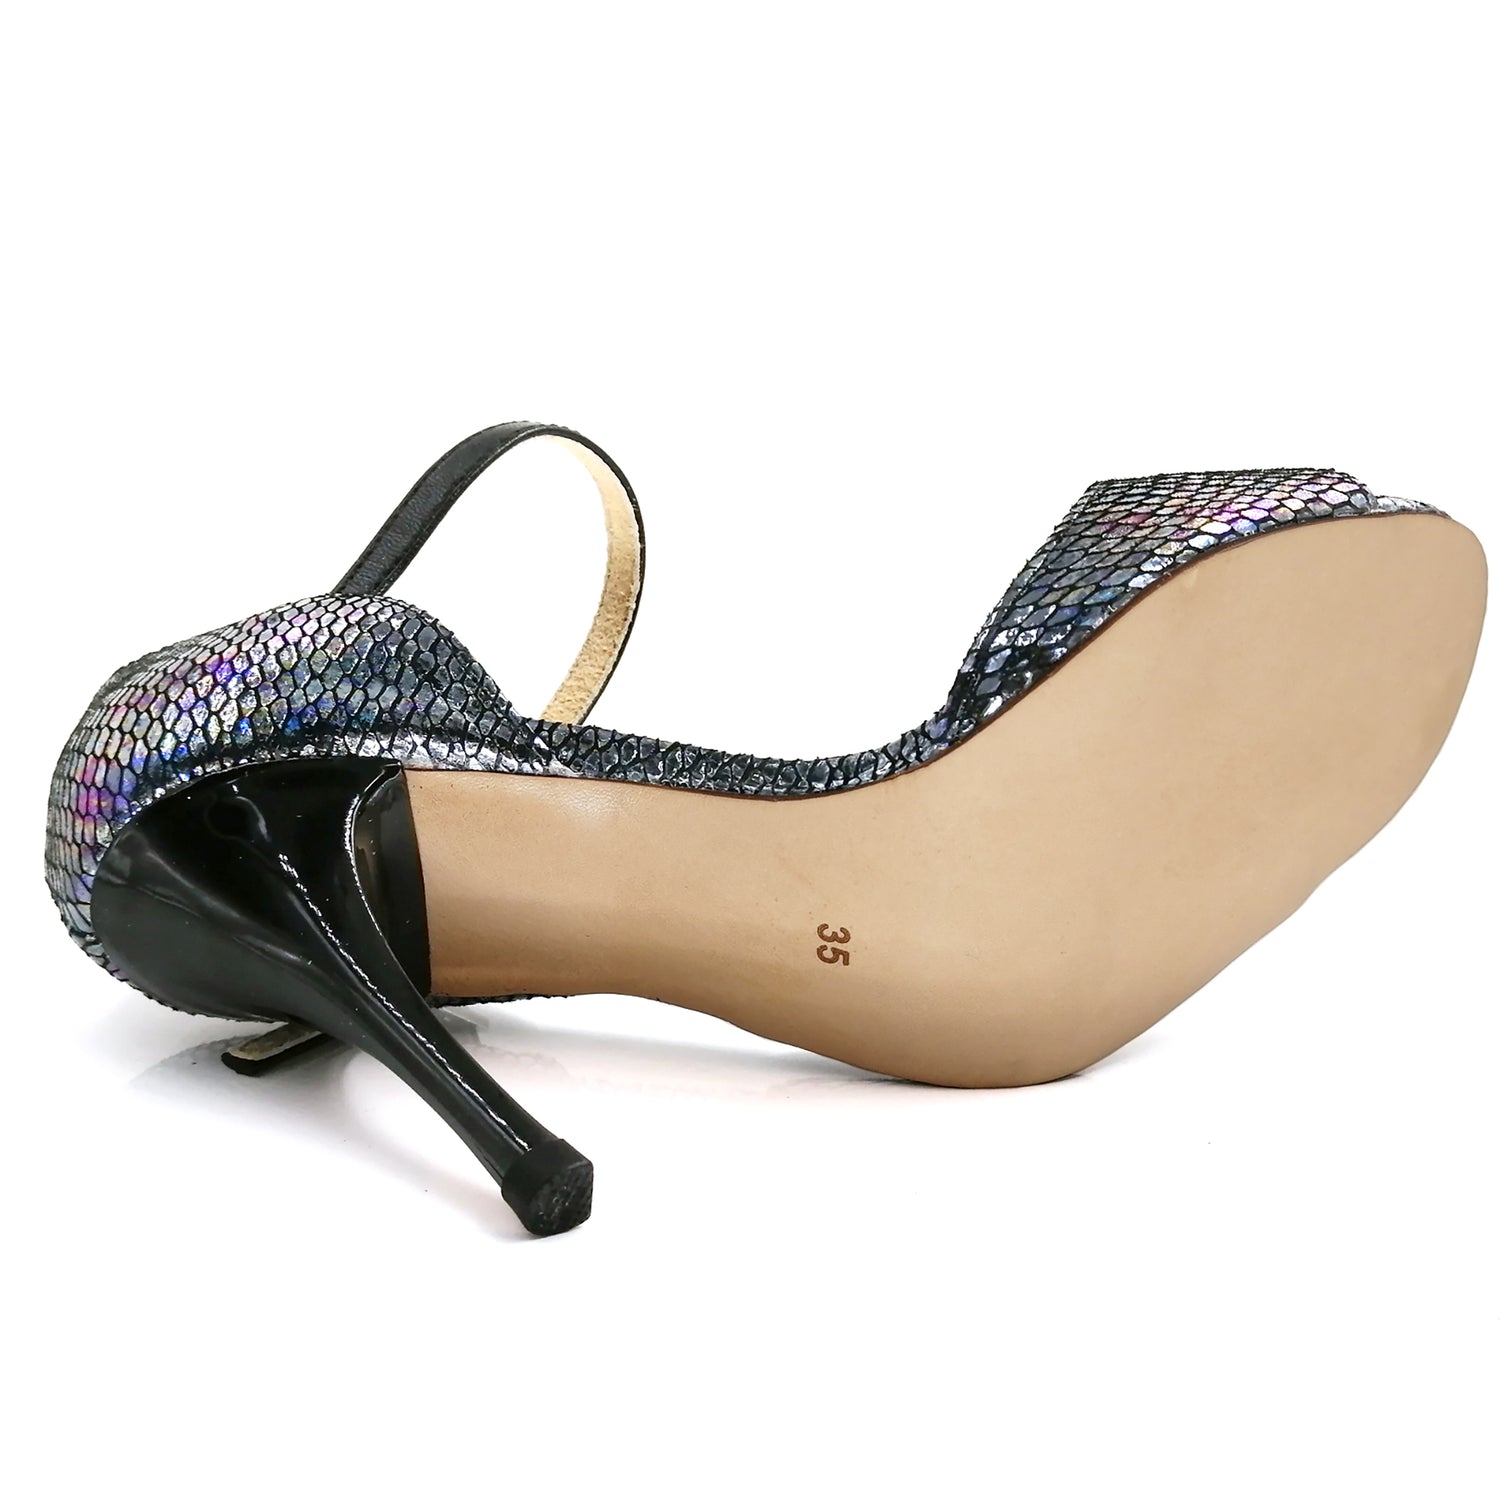 Pro Dancer multicolor leather high heel Argentine tango dance shoes PD-9001F5